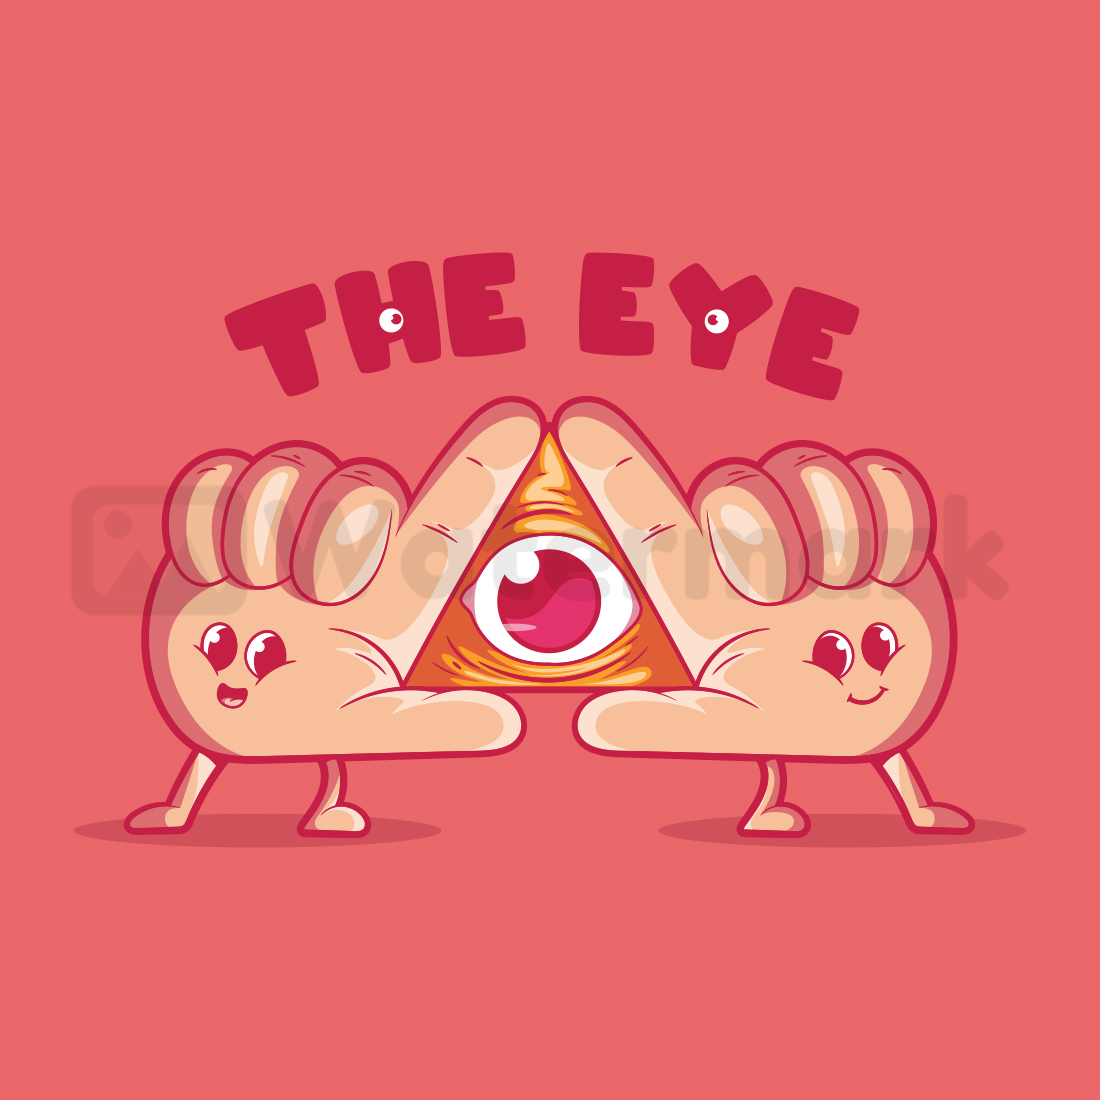 Eye Symbol Vector Design cover image.